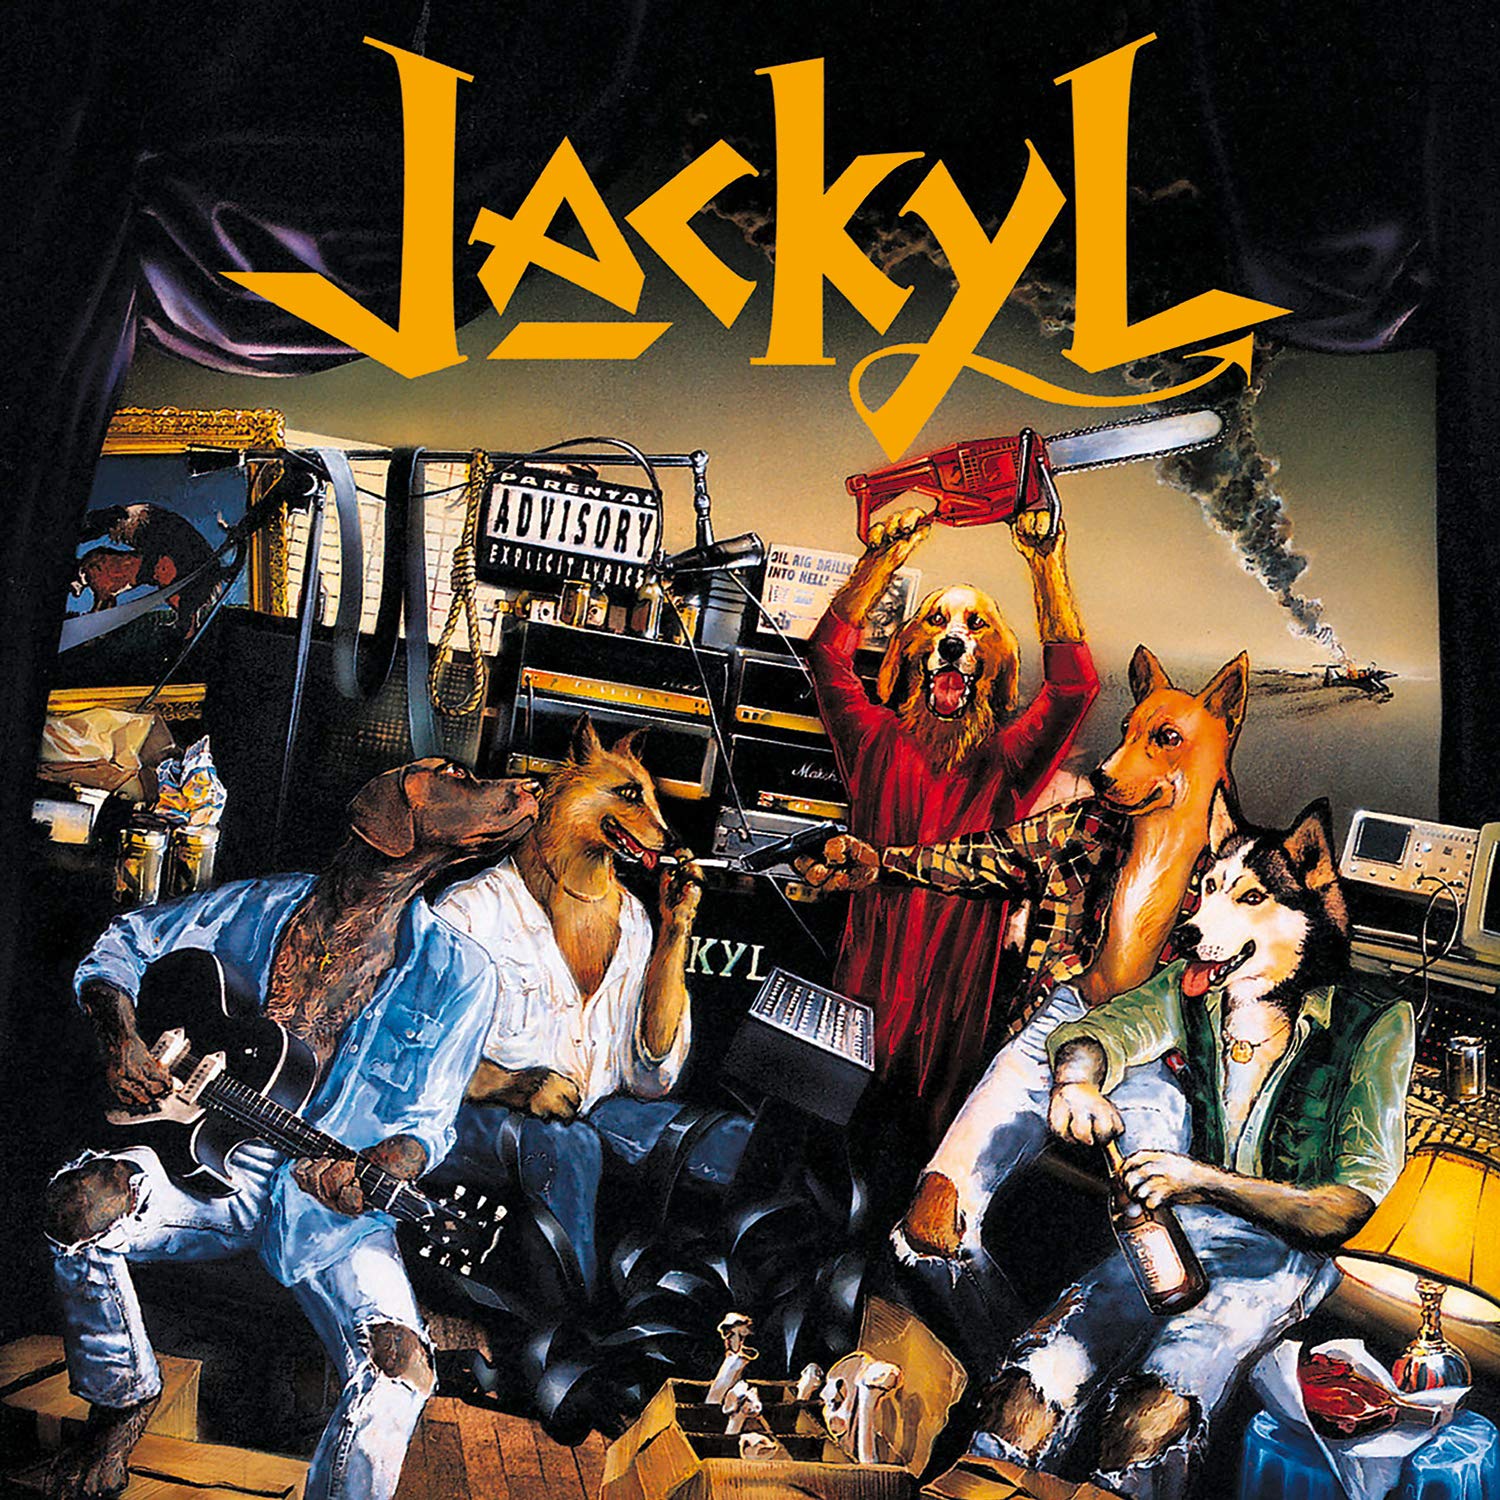 Jackyl - Jackyl (2019 180g reissue) - Vinyl - New